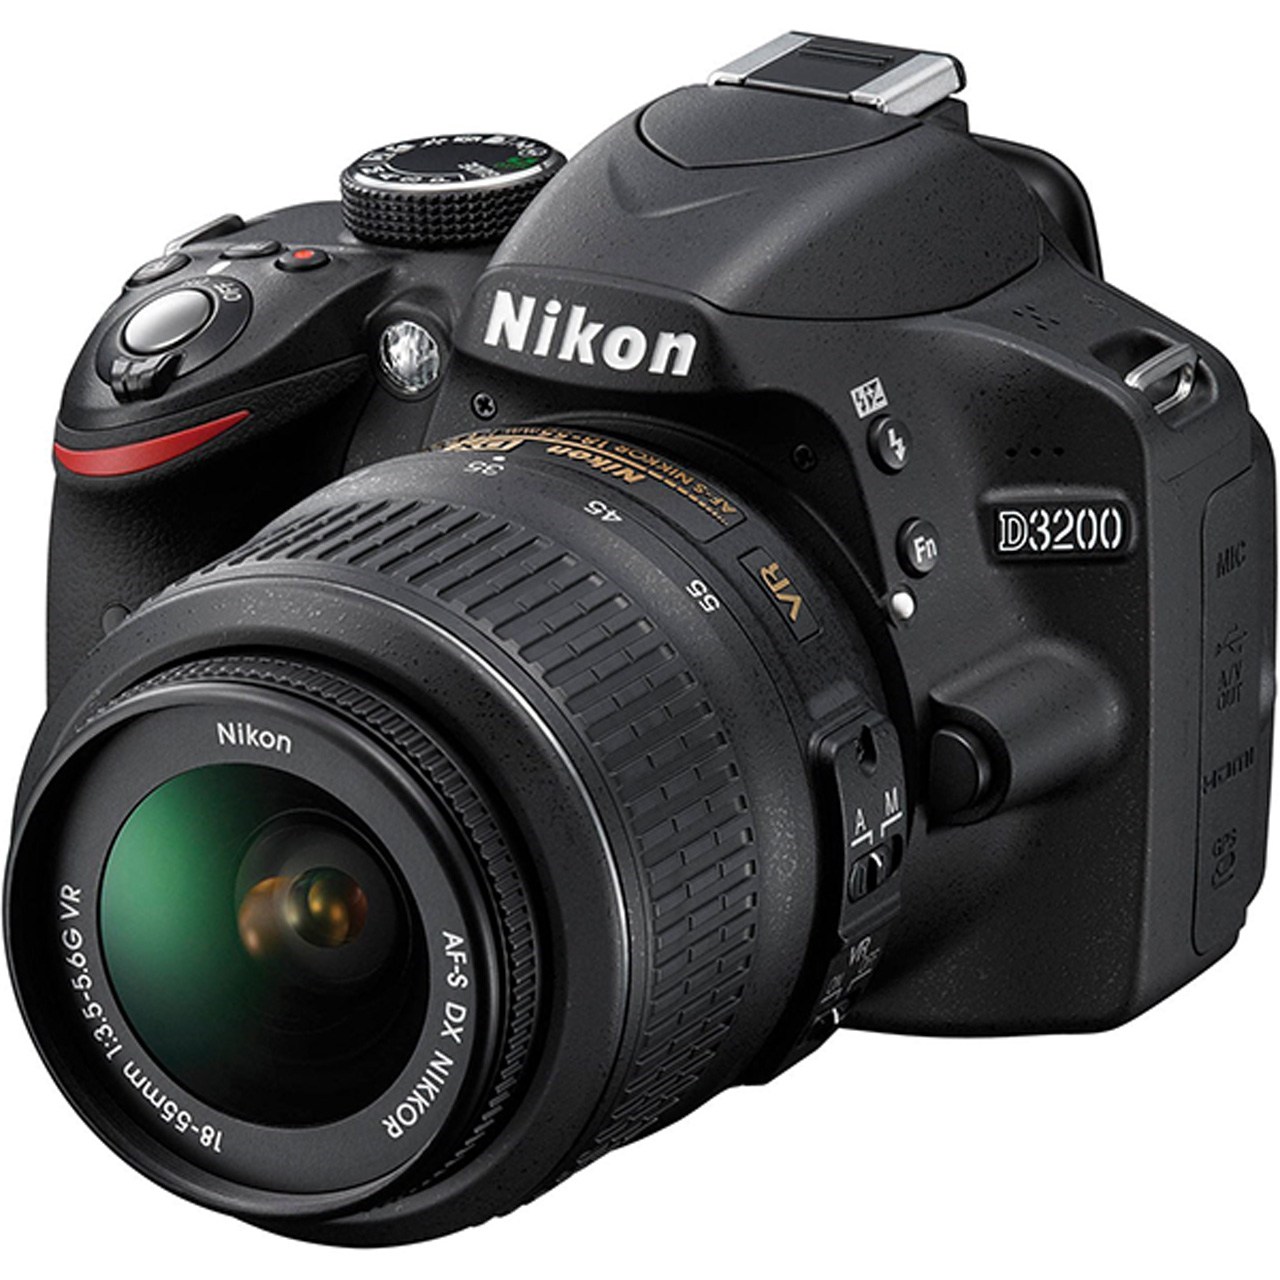 دوربین دیجیتال نیکون مدل D3200 با لنز 18-55 F/3.5-5.6G ED II